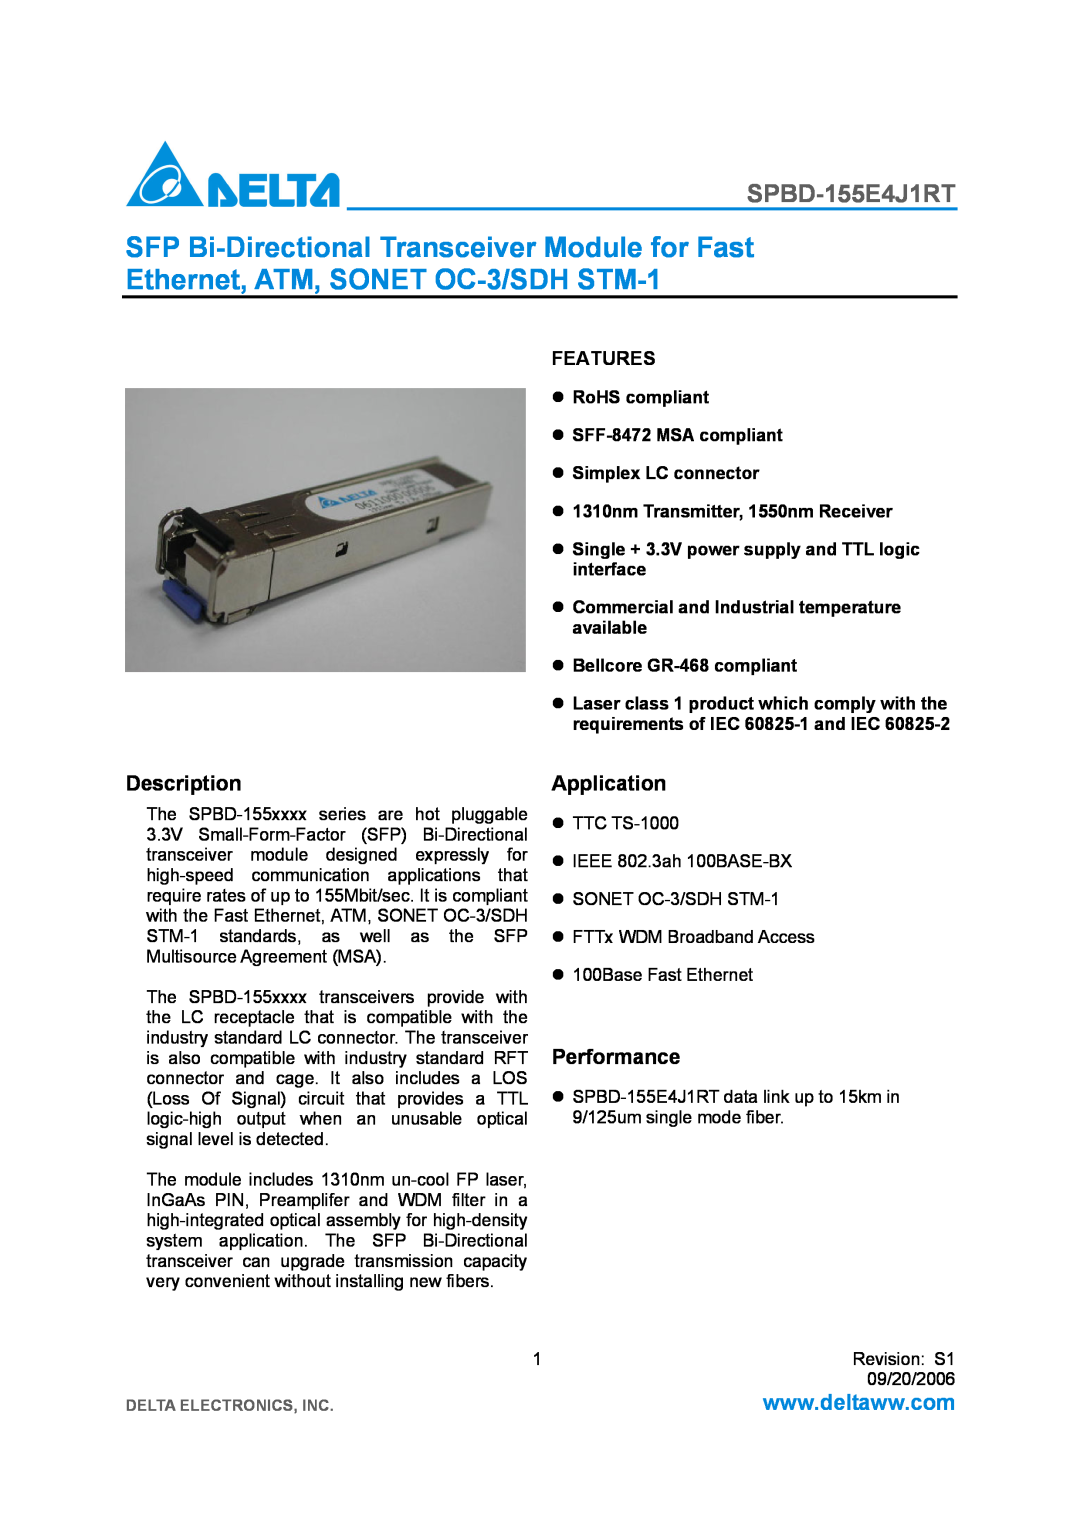 Delta Electronics SPBD-155E4J1RT manual Description, Application, Performance, 1310nm Transmitter, 1550nm Receiver 